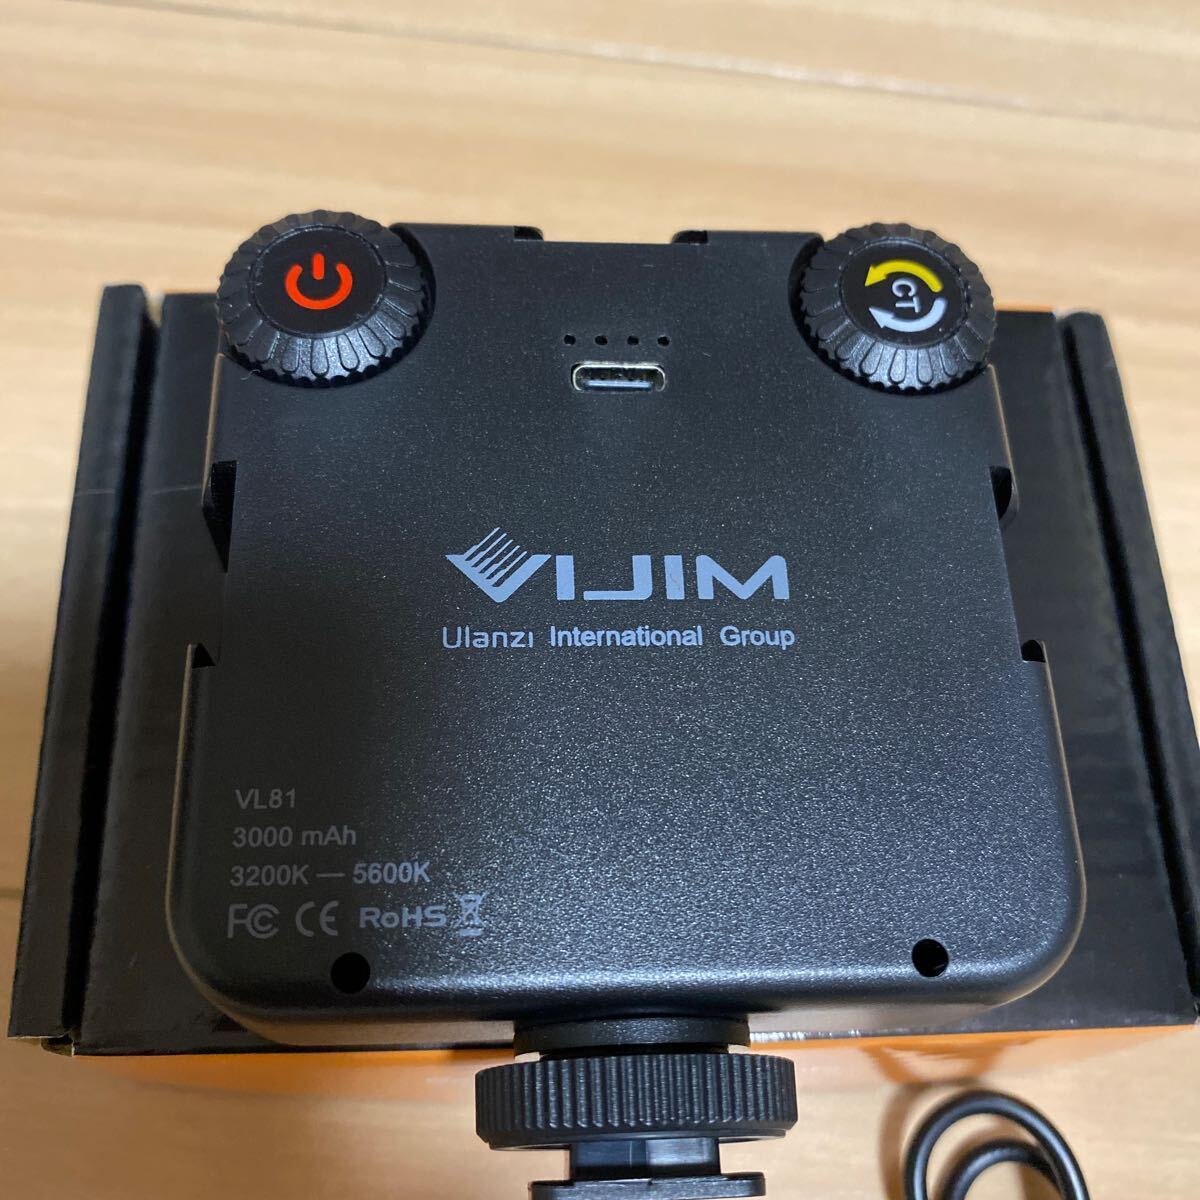 Ulanzi VL-81 LED ビデオライト 小型 充電式 3000mAh Type-C 3200k-5600k CRI95+ 色温度調整可能 スマートカメラライト 補助照明 撮影_画像8